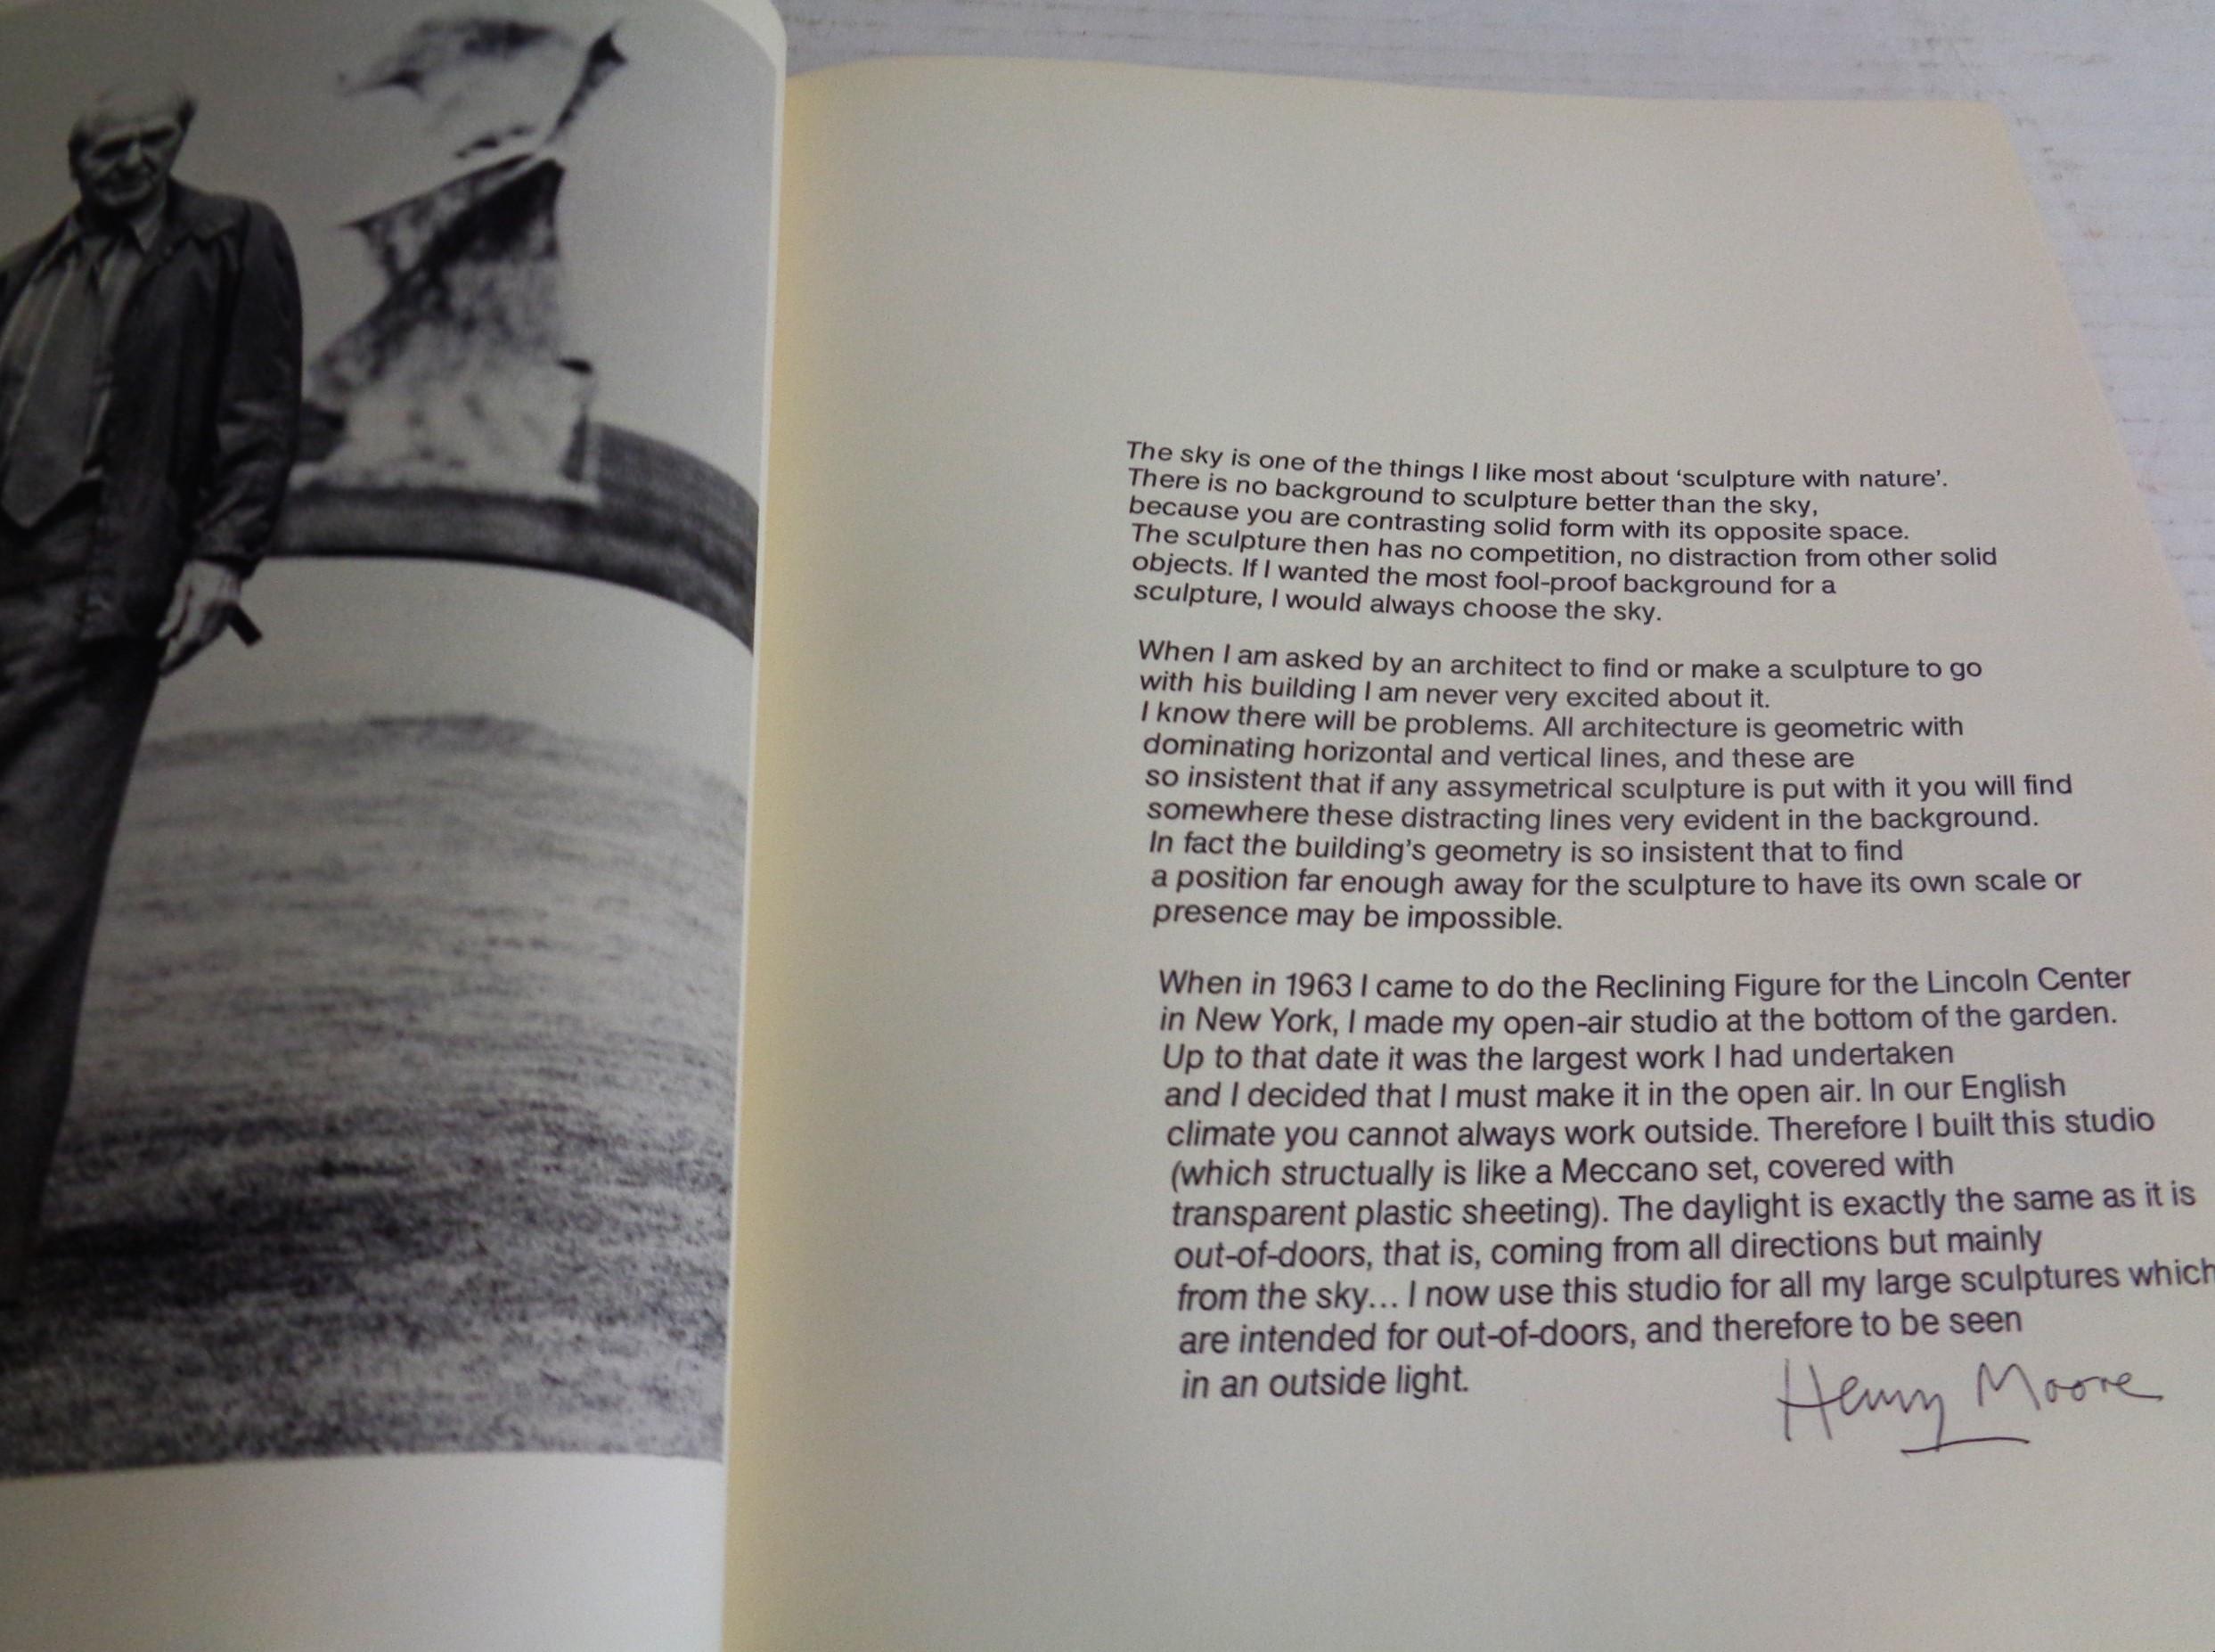 Henry Moore Sculptures in Landscape - 1978 Clarkson N. Potter - 1st Edition For Sale 3